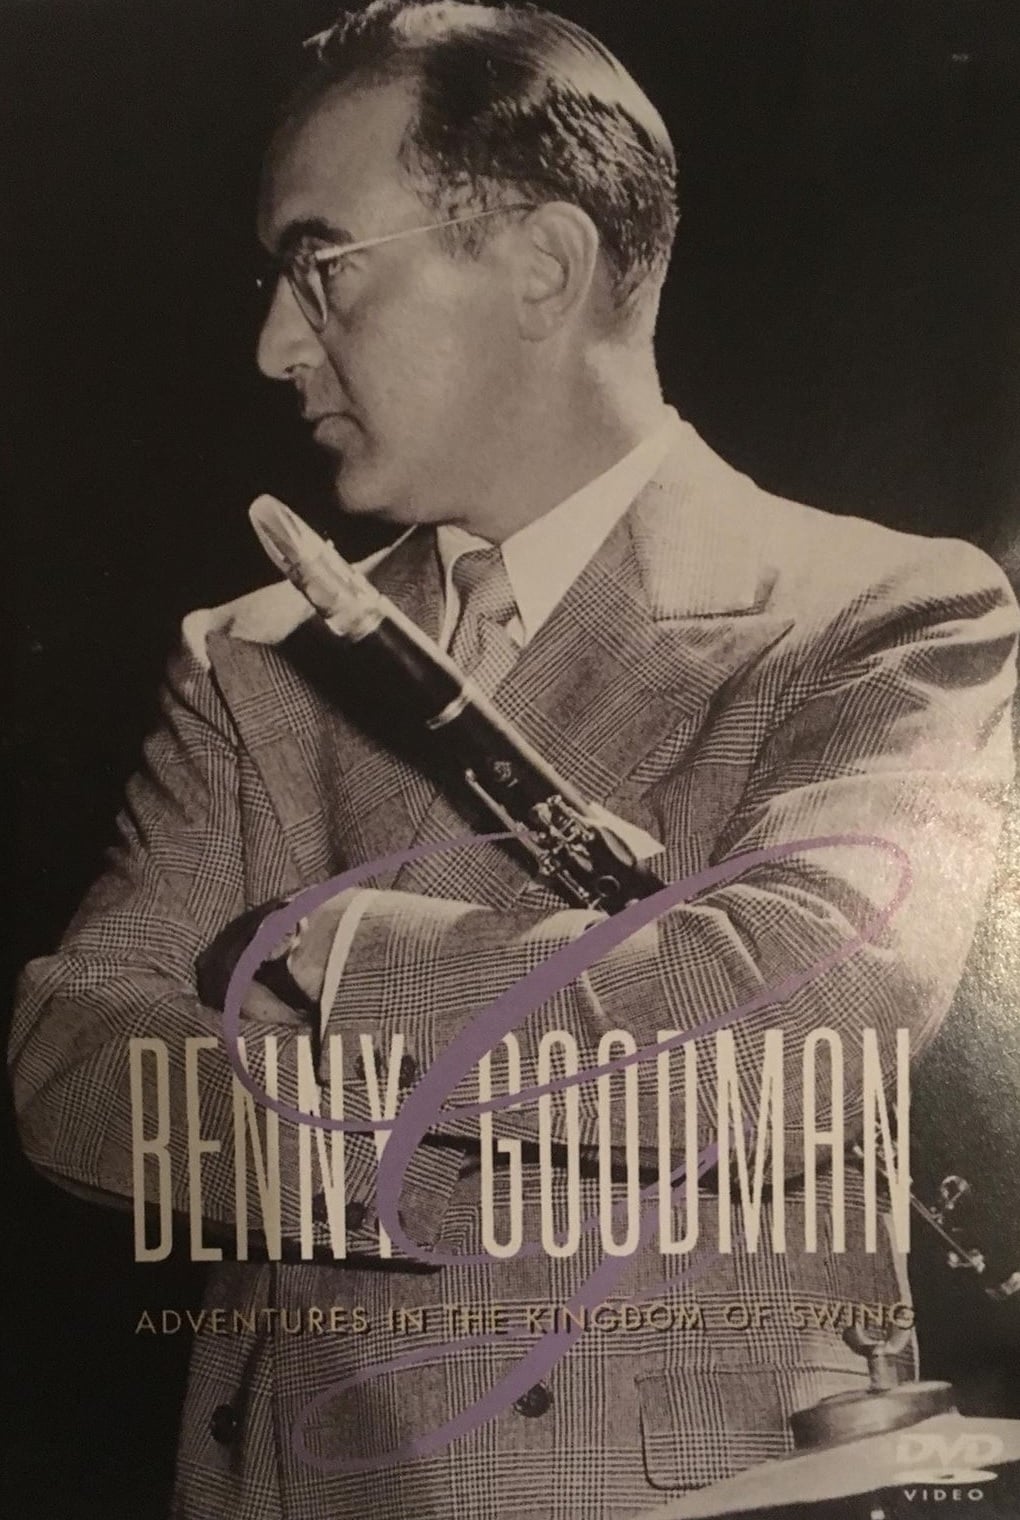 Benny Goodman - Adventures In The Kingdom Of Swing